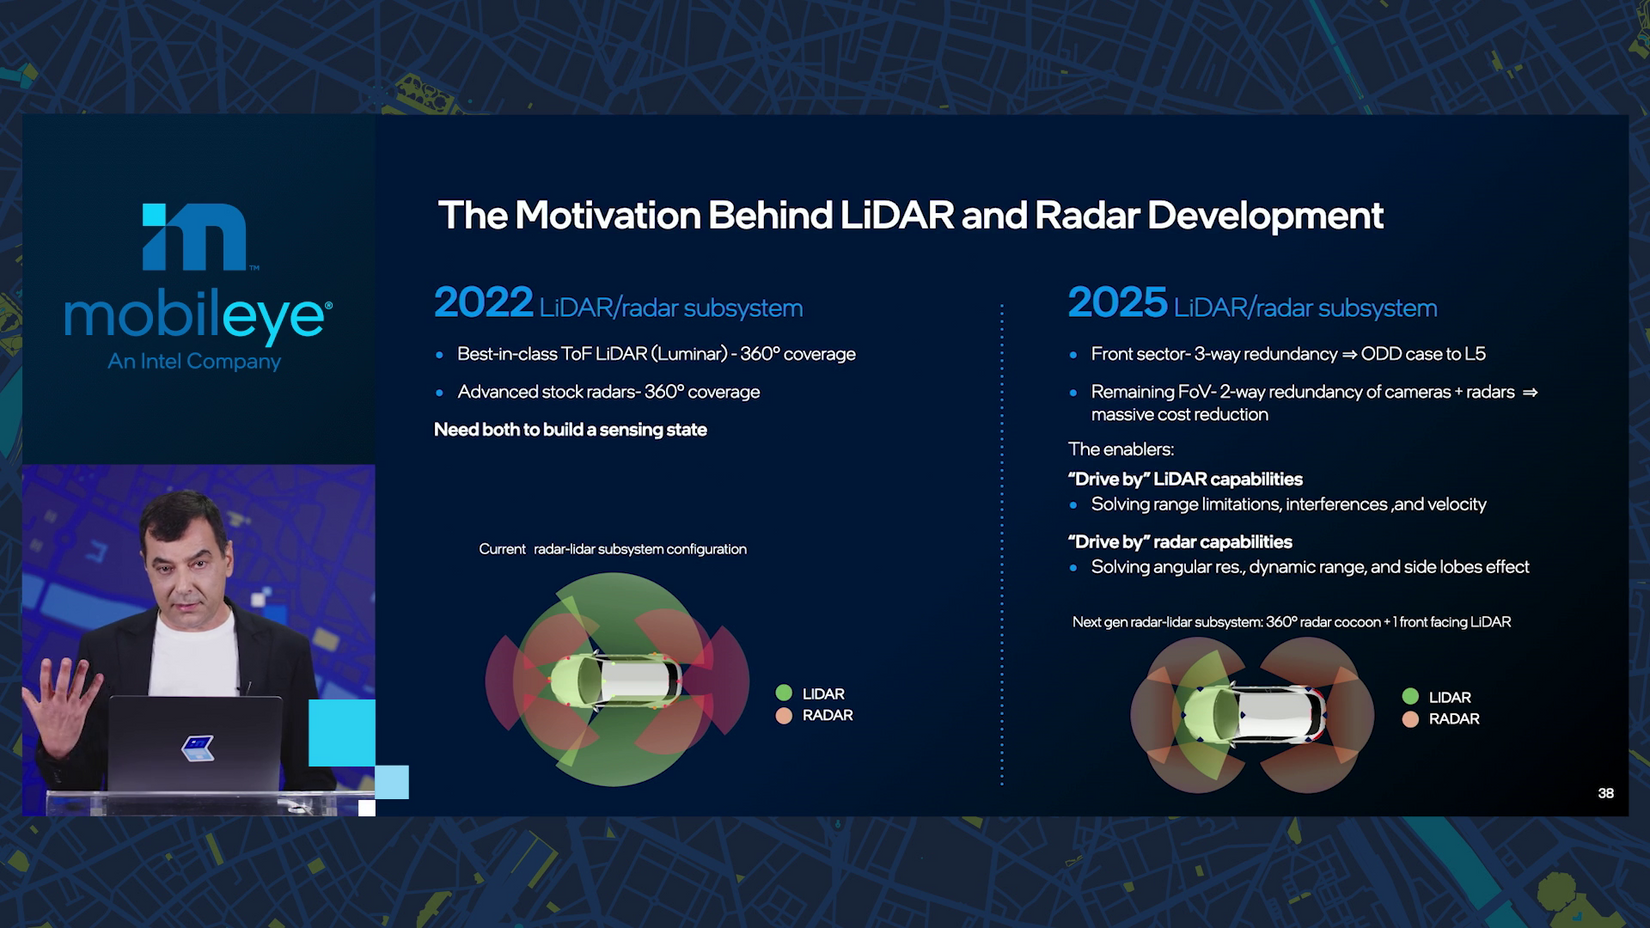 The motivation behind LiDAR and Radar development